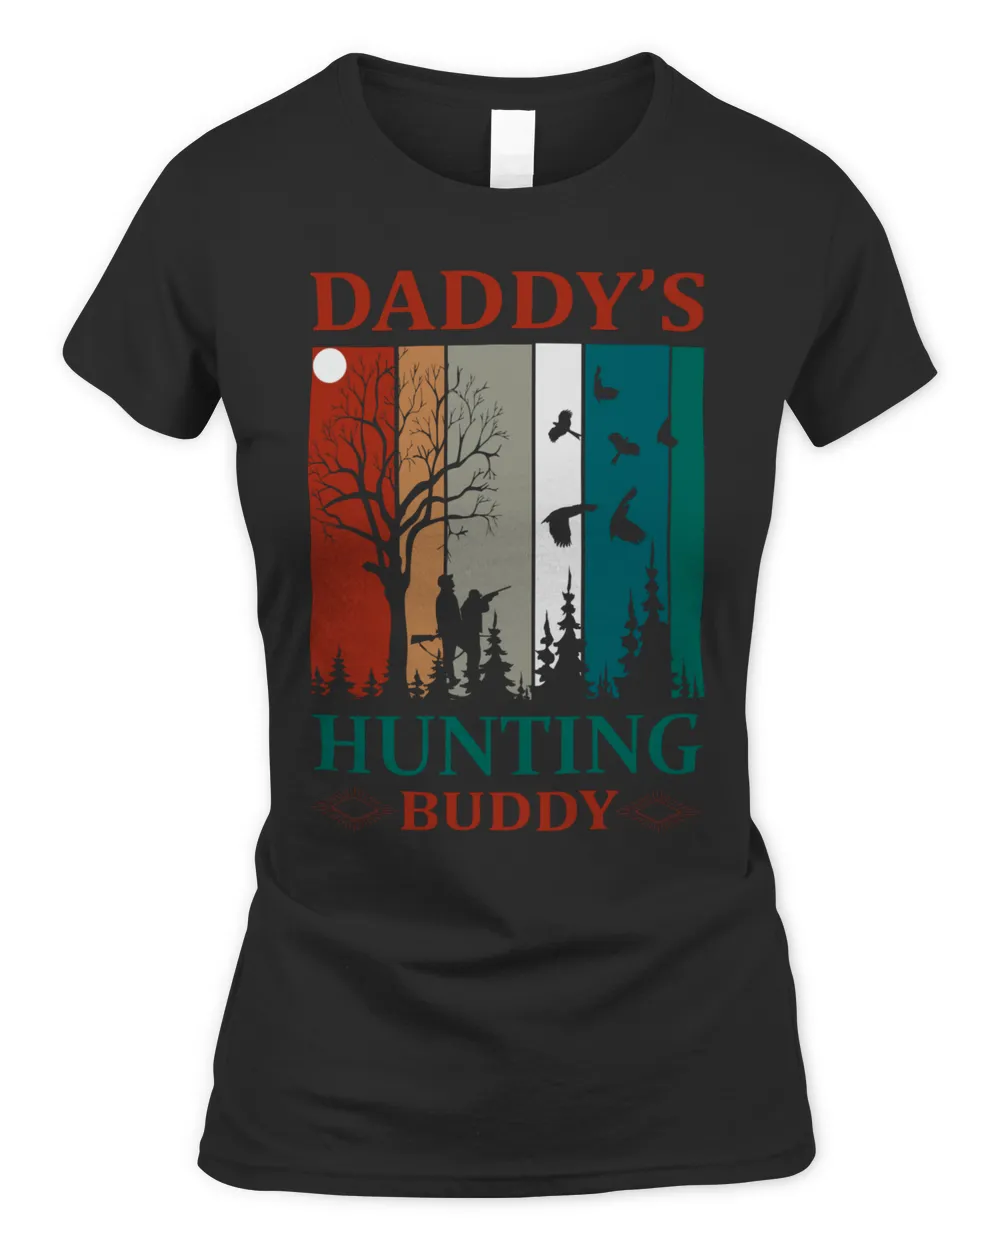 Hunting T-Shirt, Hunting Shirt for Dad, Grandfather (71)